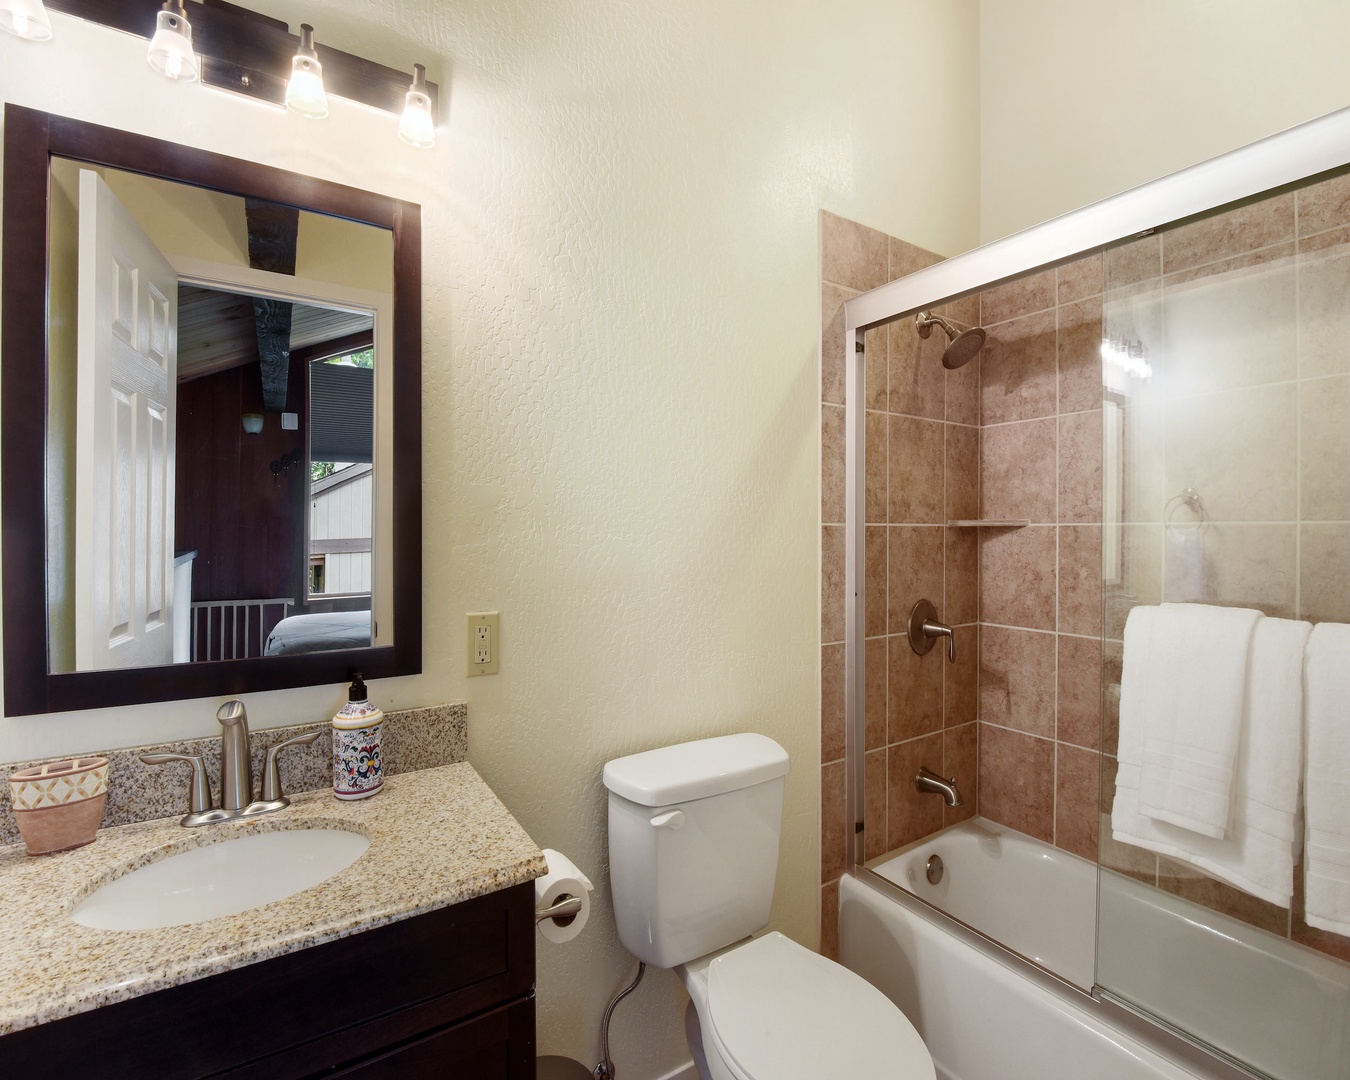 En suite bathroom with shower/tub combo